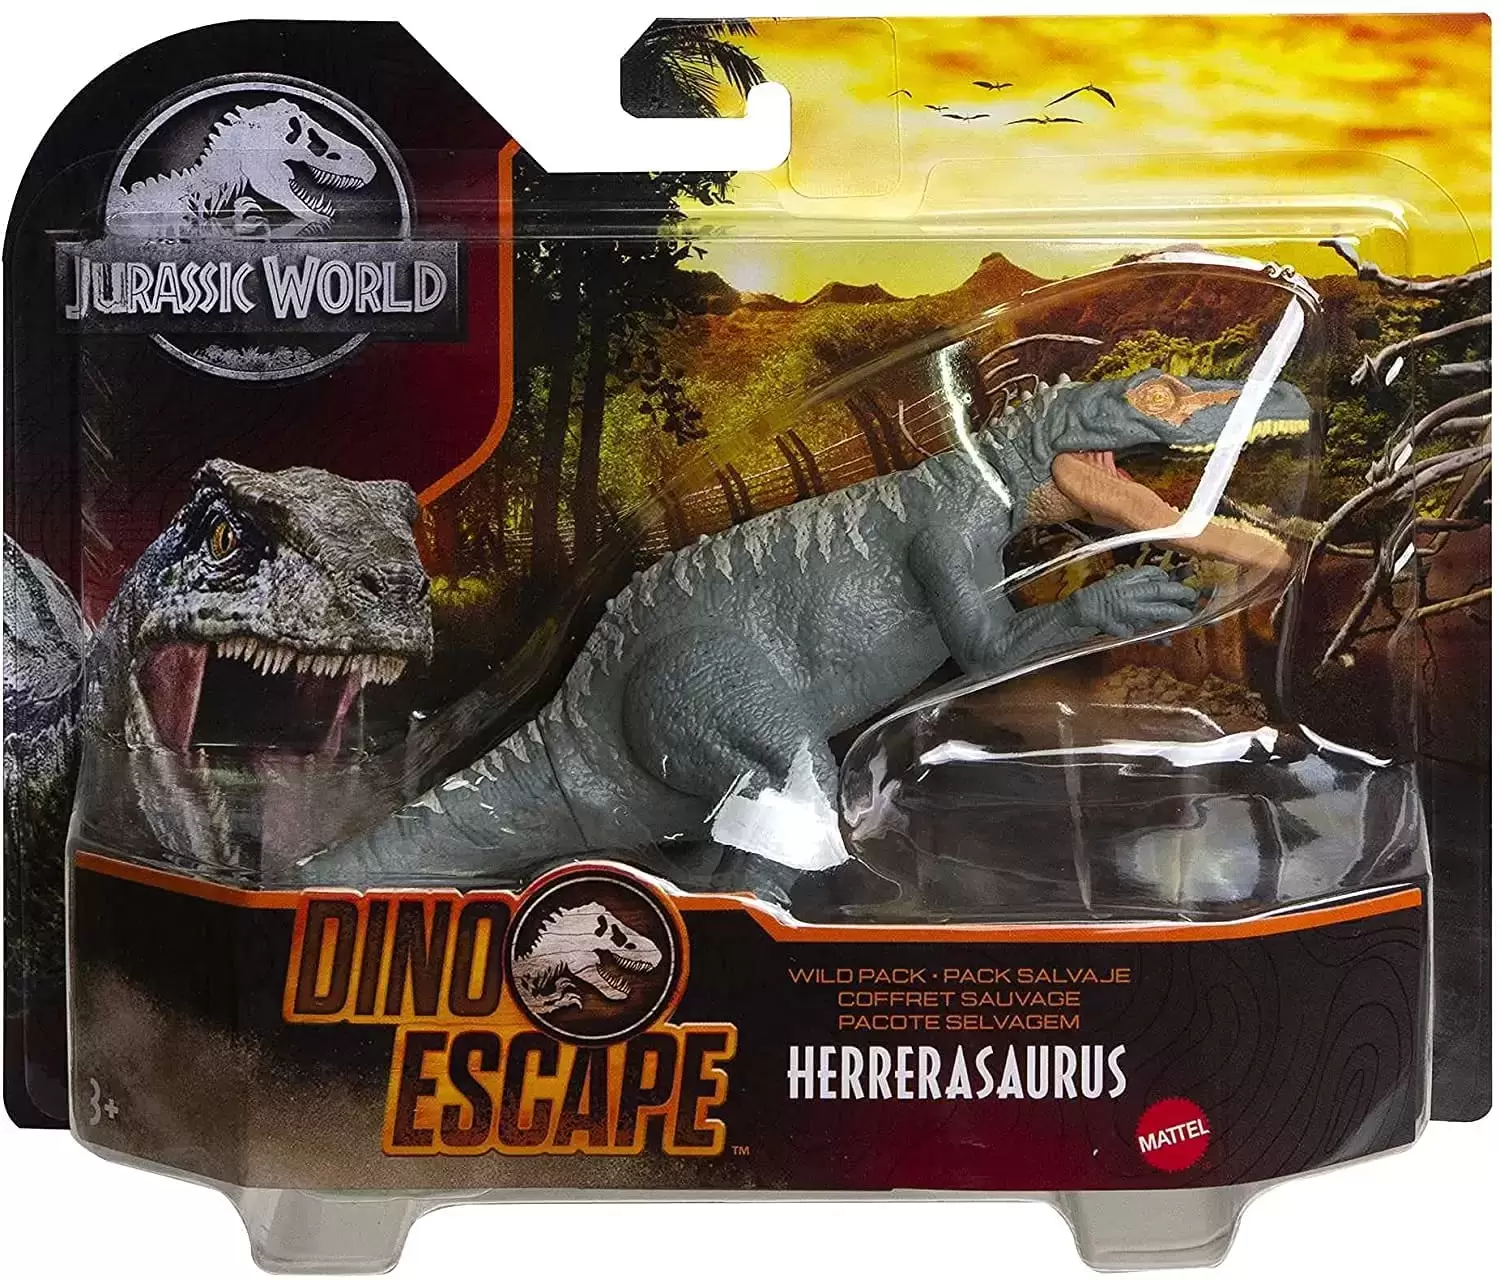 Jurassic World : Camp Cretaceous / Dino Escape - Herrerasaurus - Wild Pack